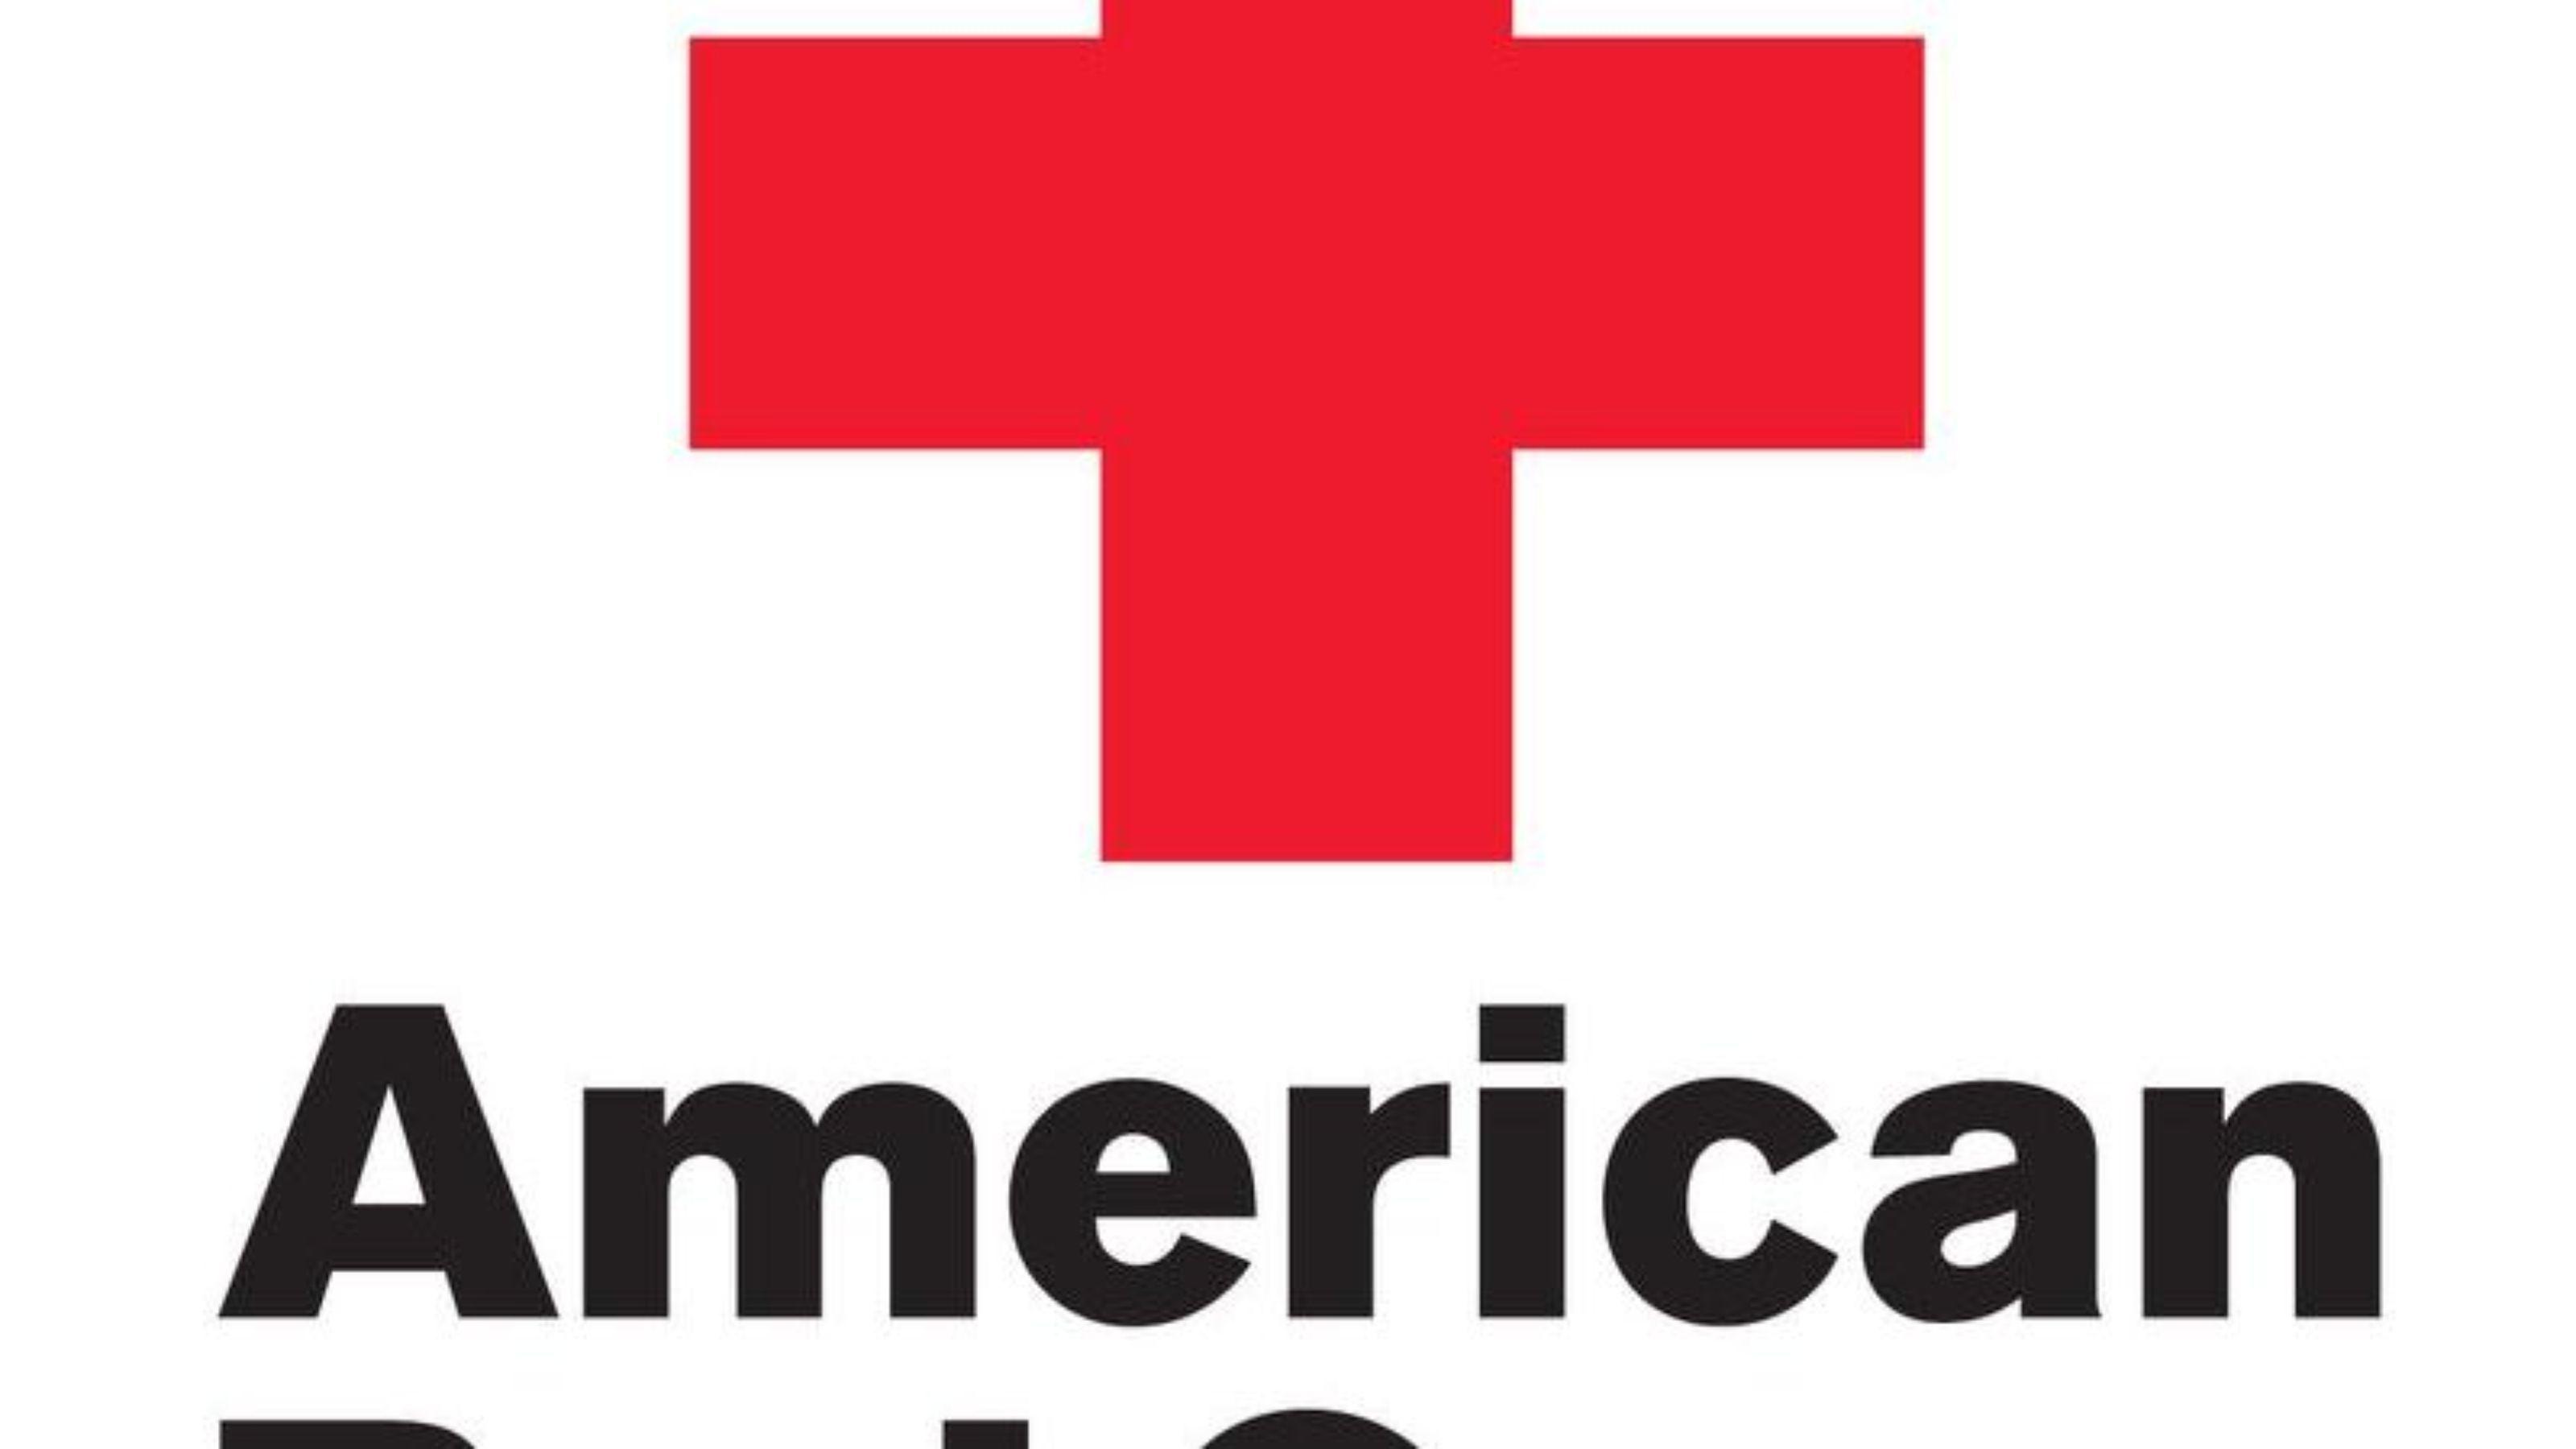 Amrican Red Cross Logo - American red cross Logos